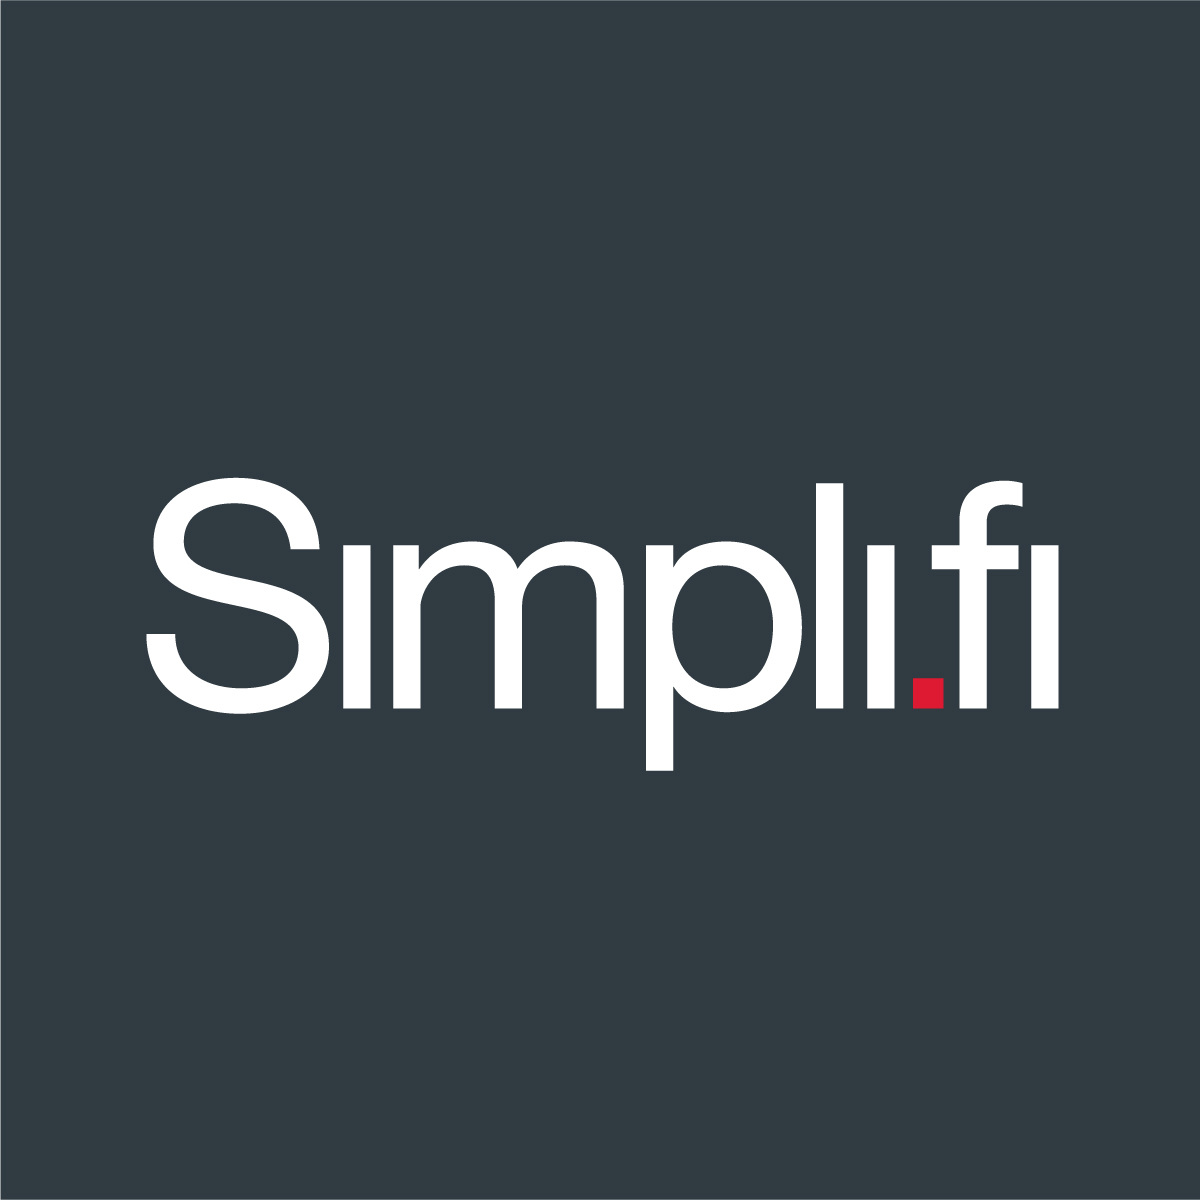 Simpli.fi Logo - Simpli.fi - Digital Advertising Intern - Fall 2019